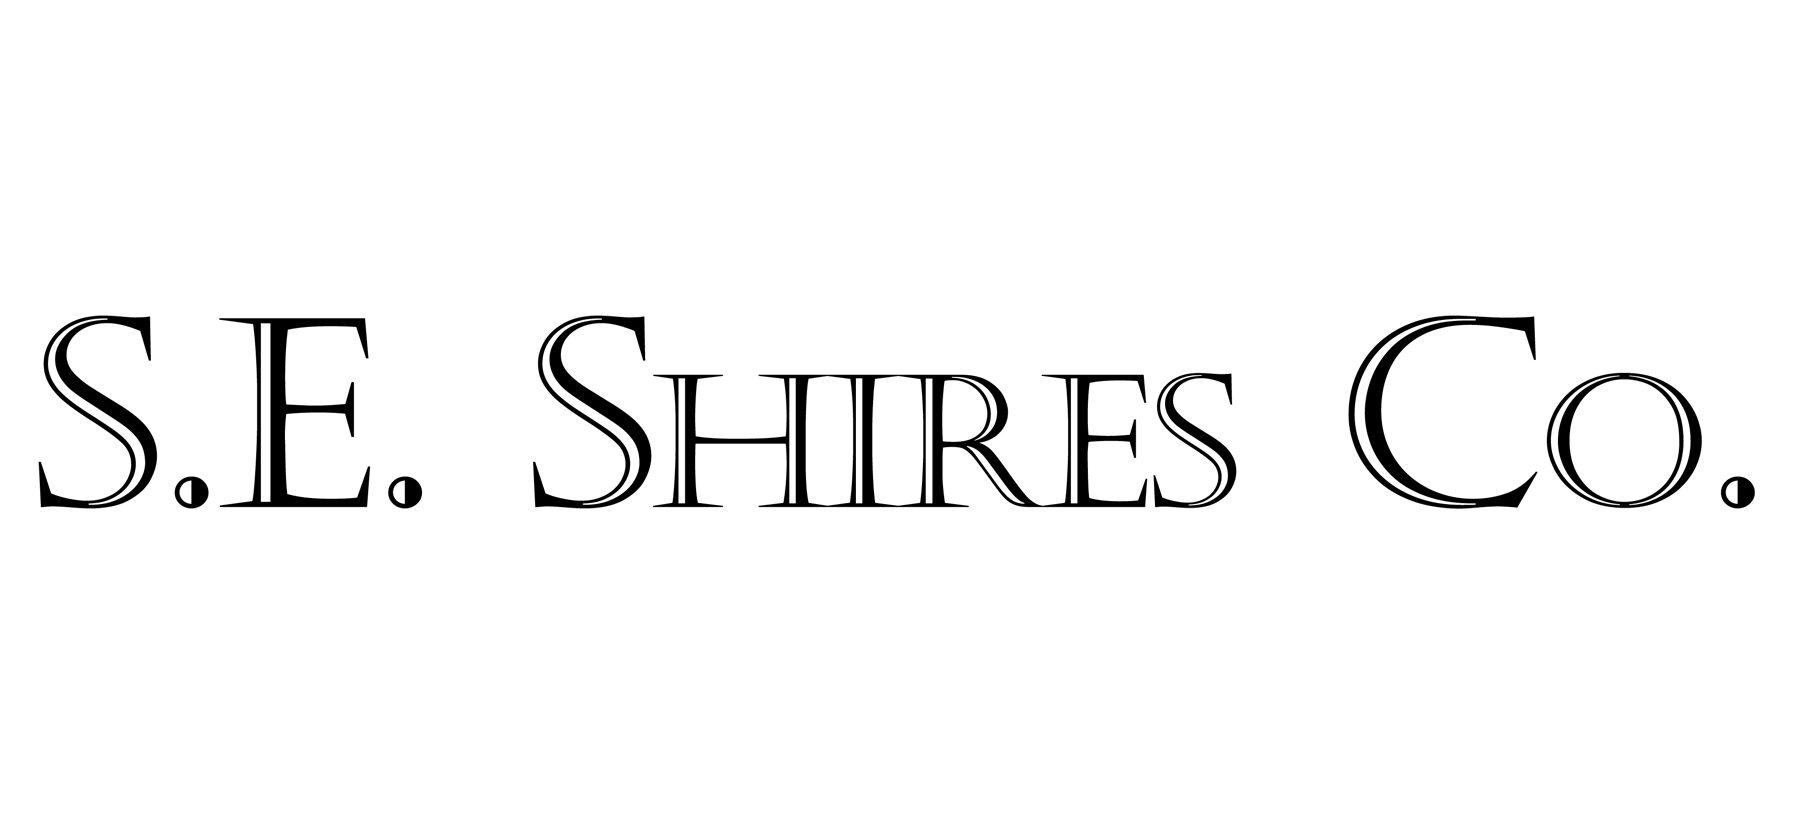 GB-logo